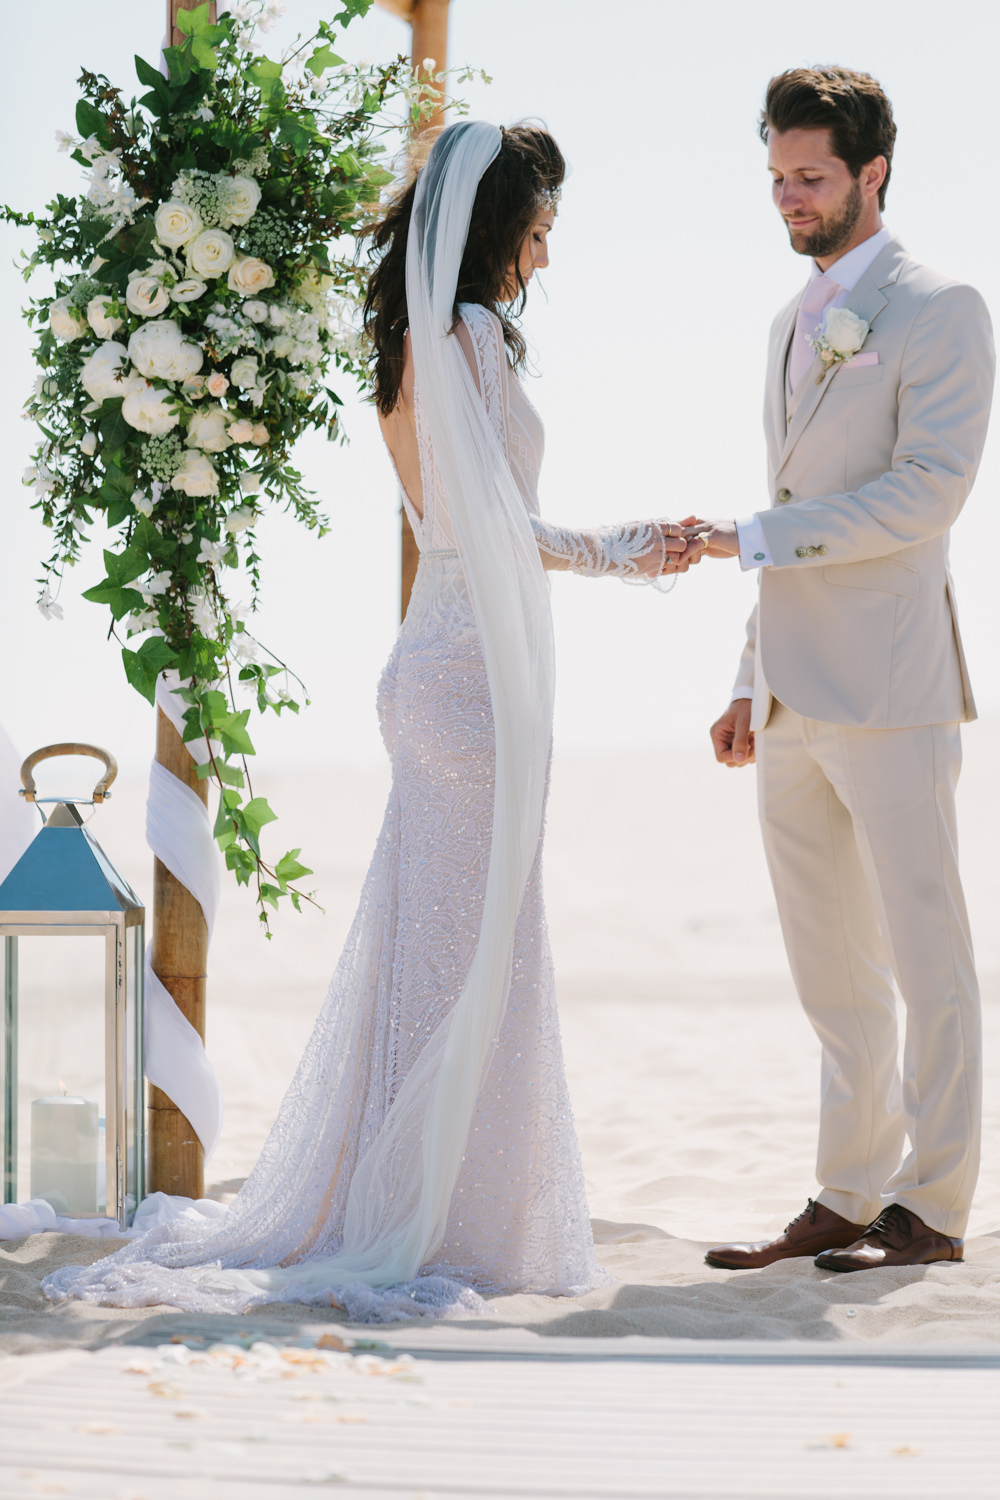 Portugal Beach Wedding At Ilha Deserta Planned By Susana At